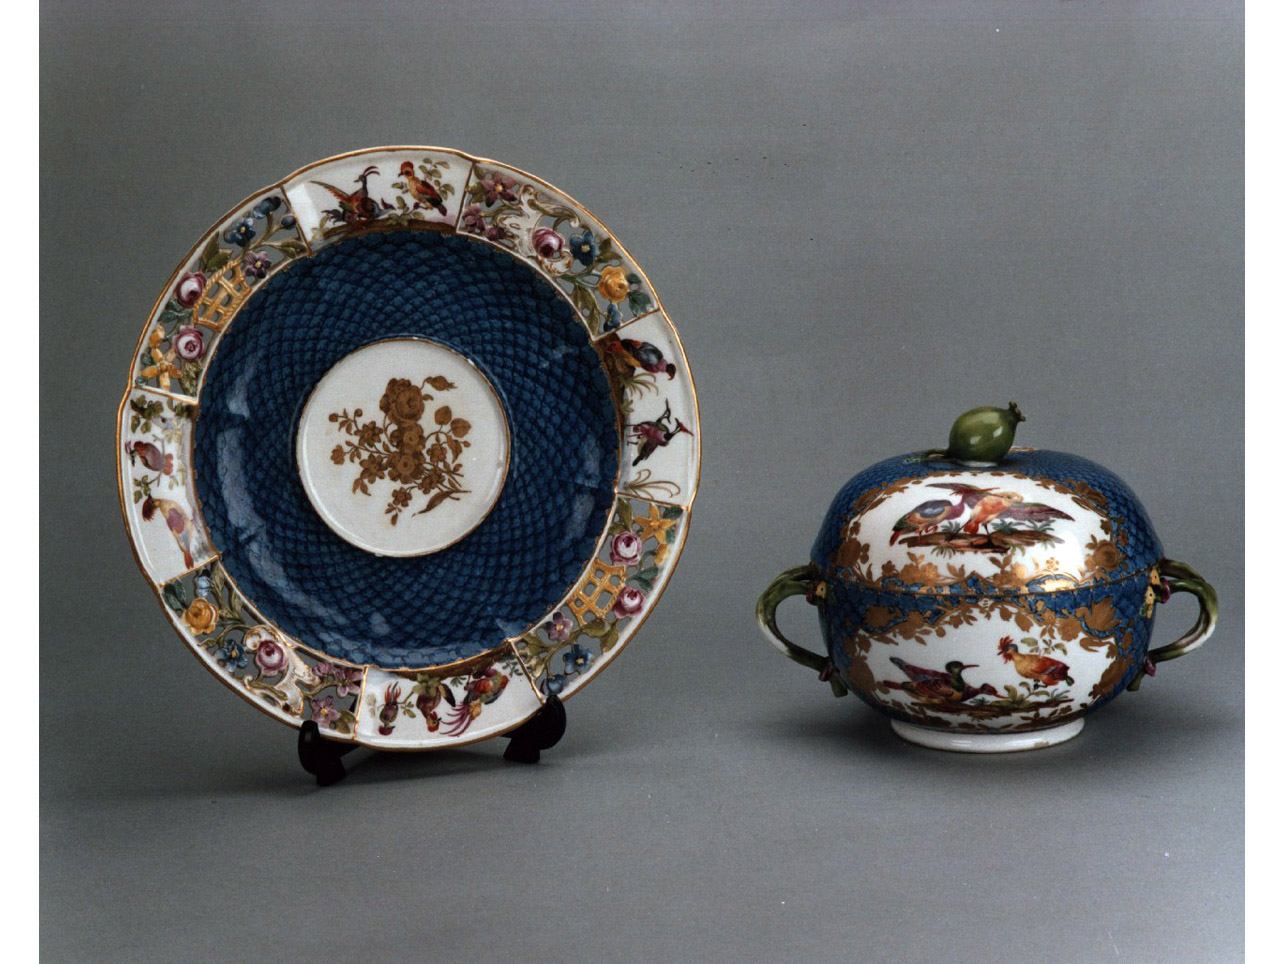 motivi decorativi vegetali e animali (tazza) - manifattura di Meissen (sec. XVIII)